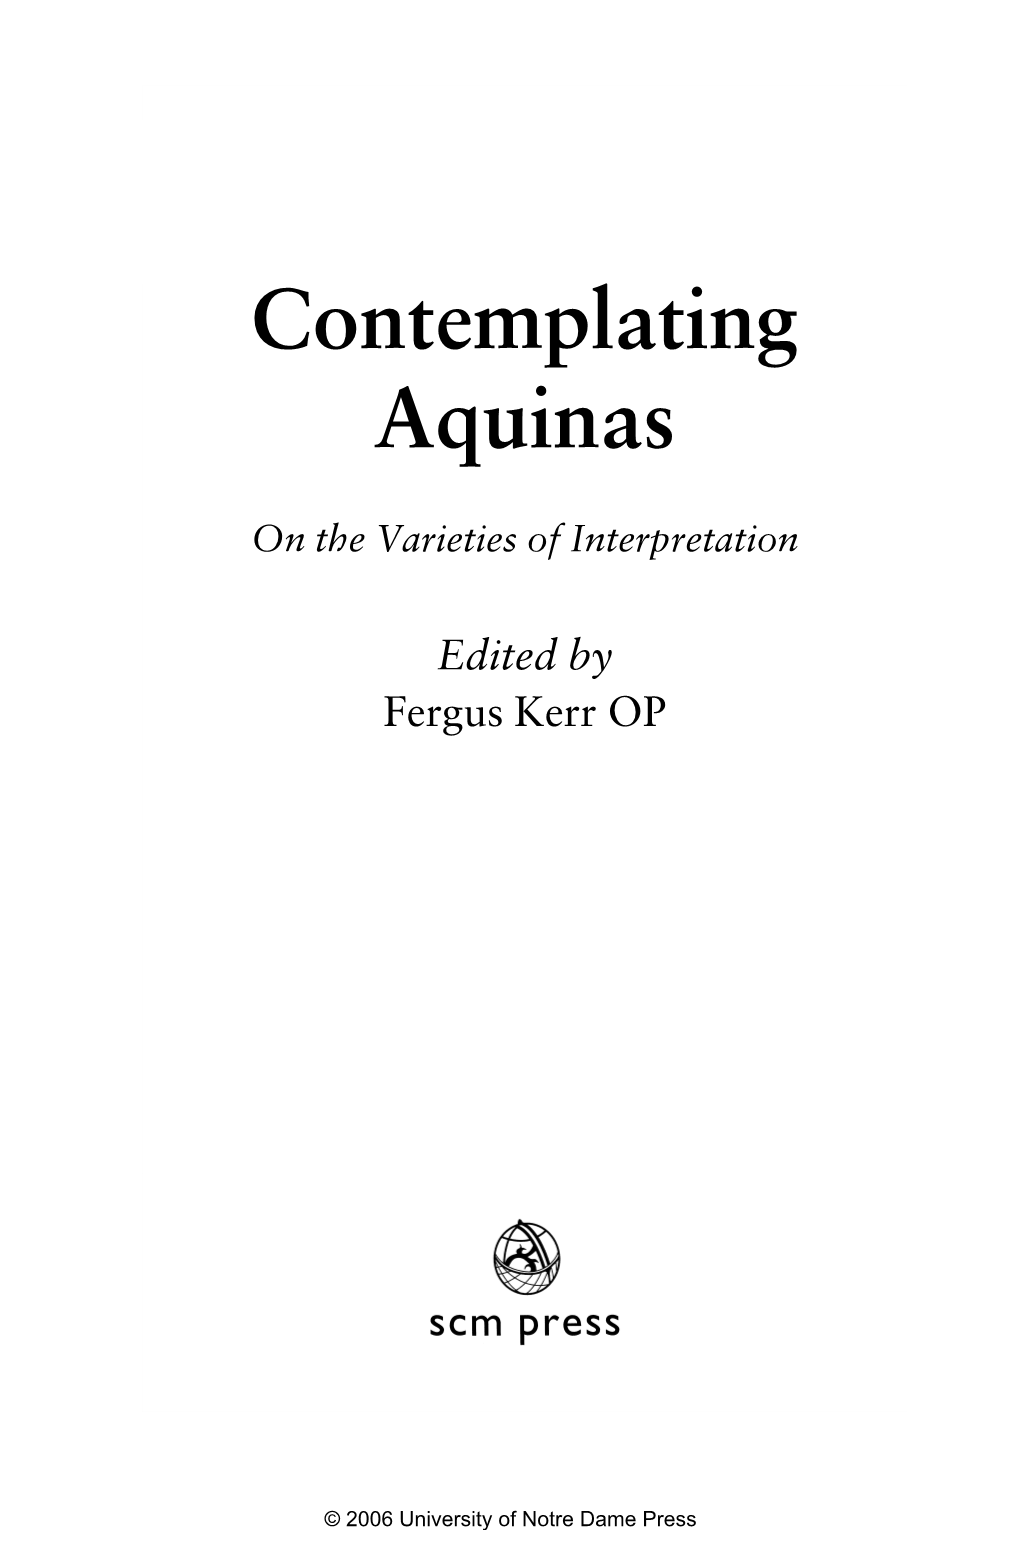 Contemplating Aquinas 9/15/03 12:51 PM Page Iii